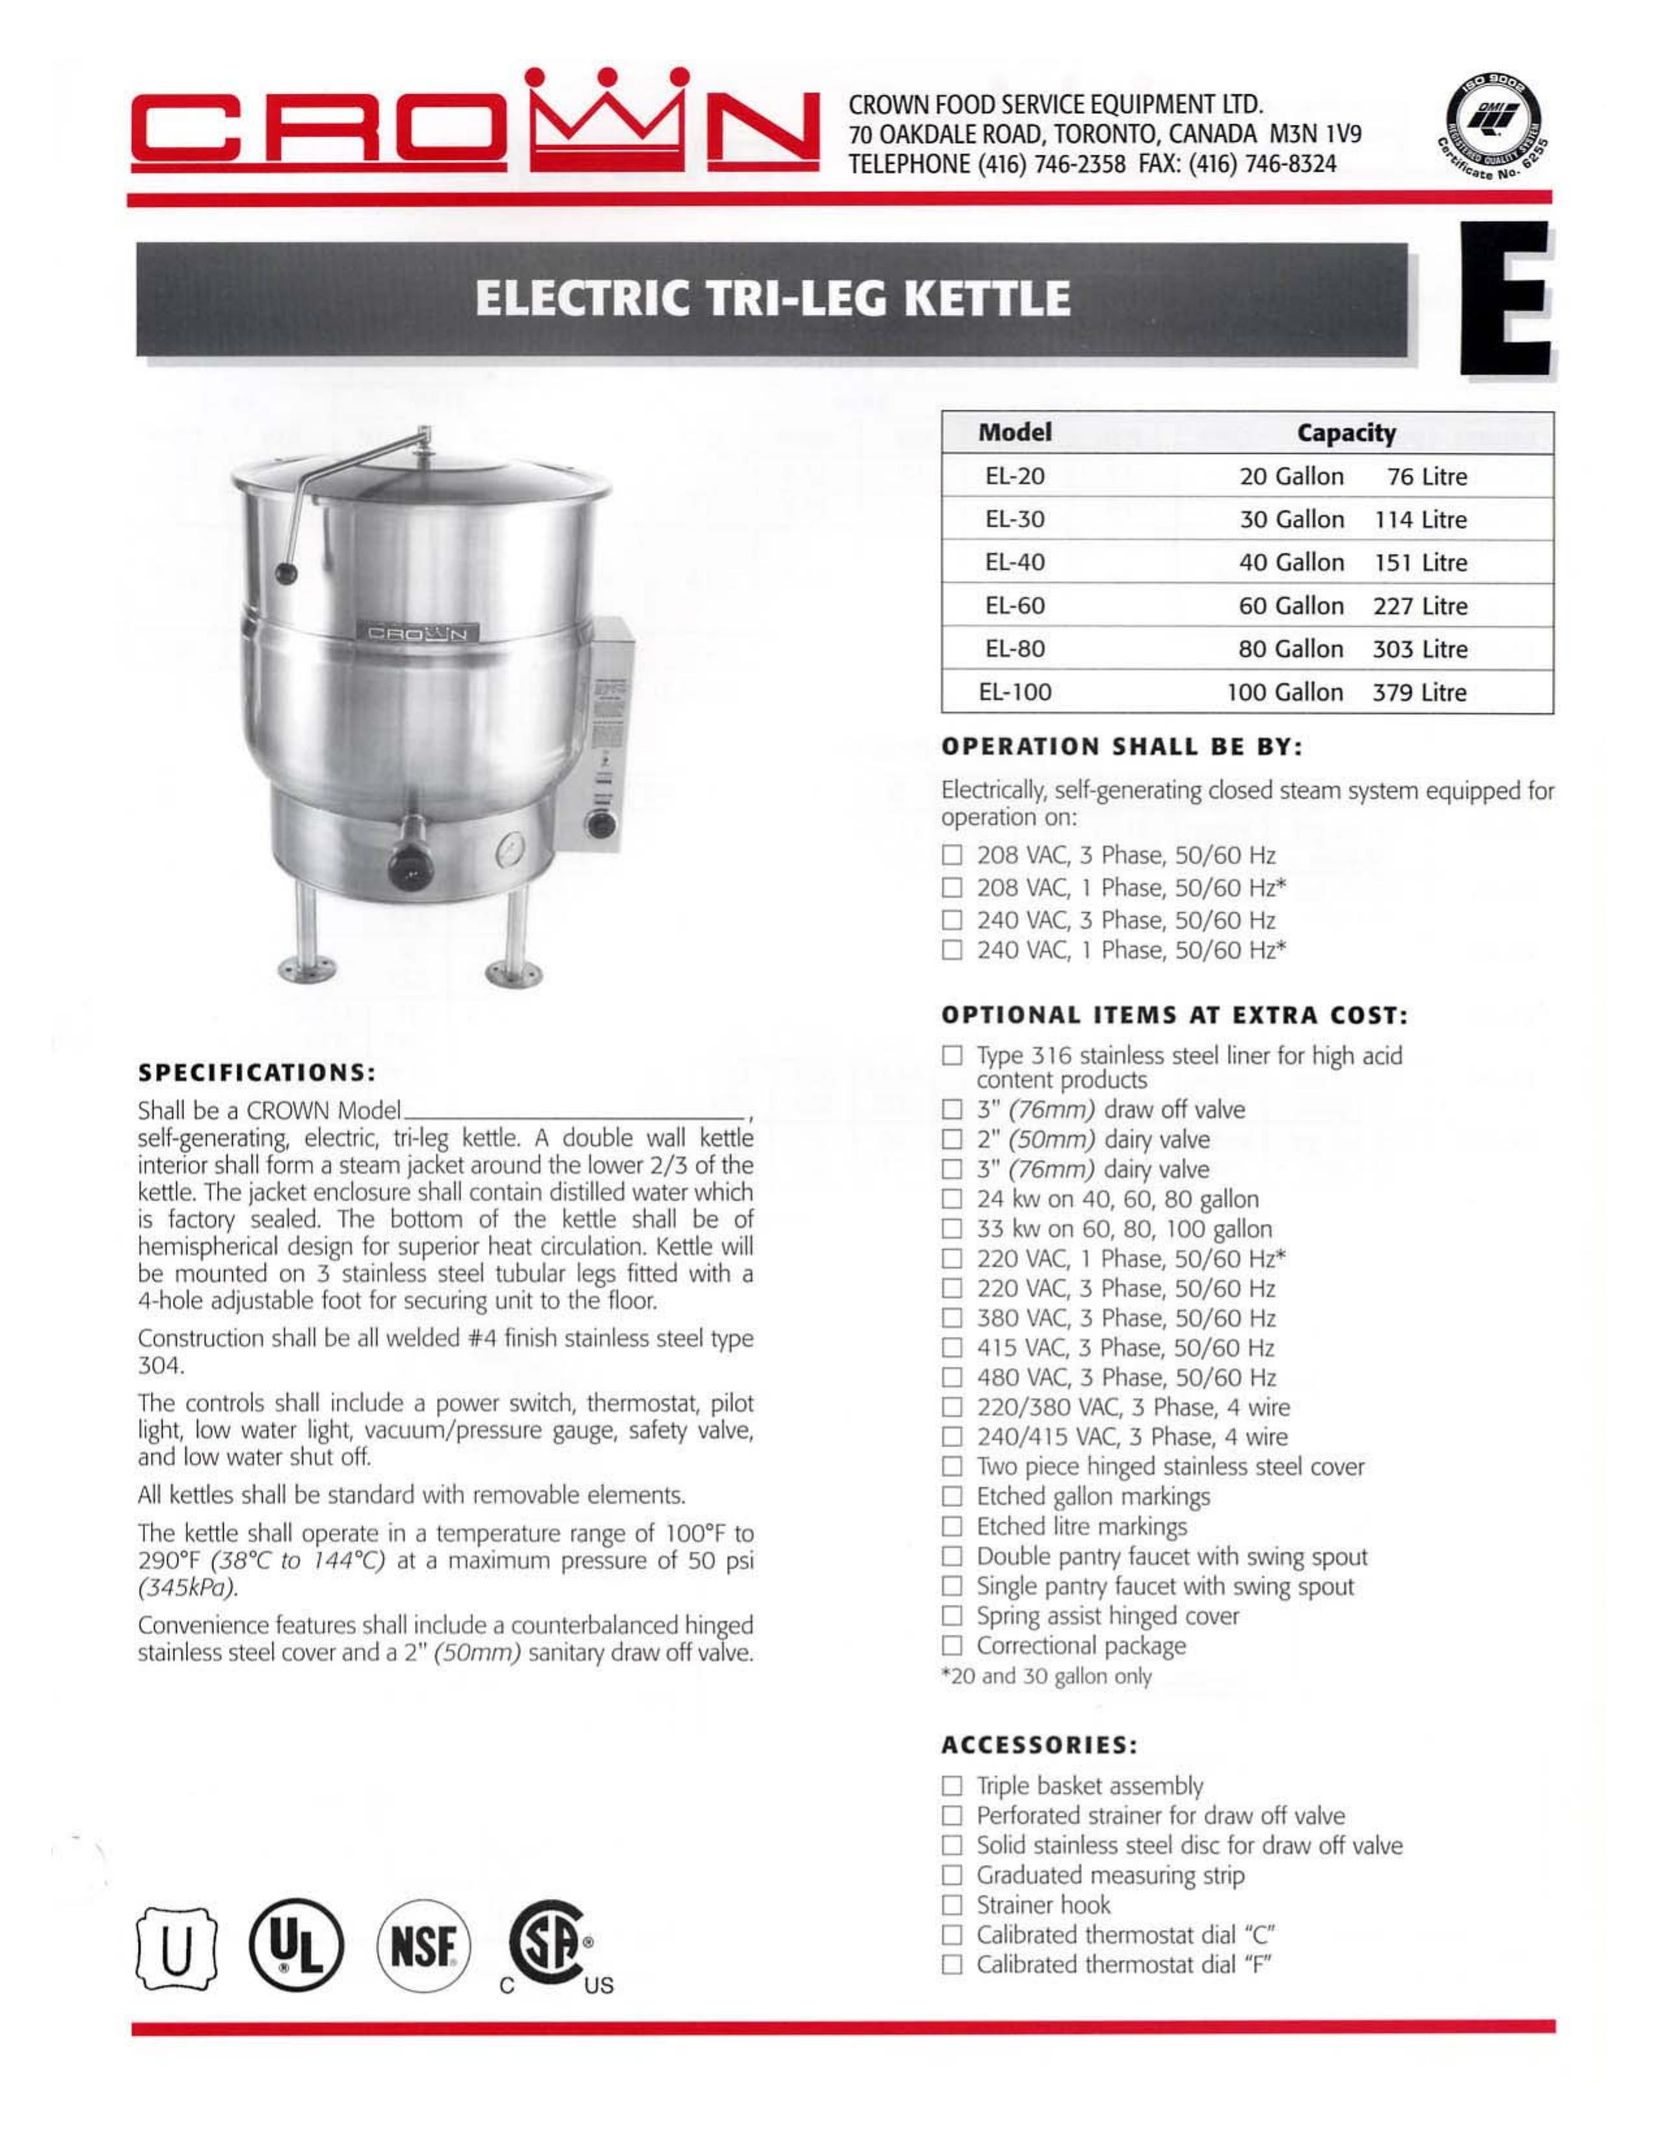 Crown Equipment EL-100 Hot Beverage Maker User Manual